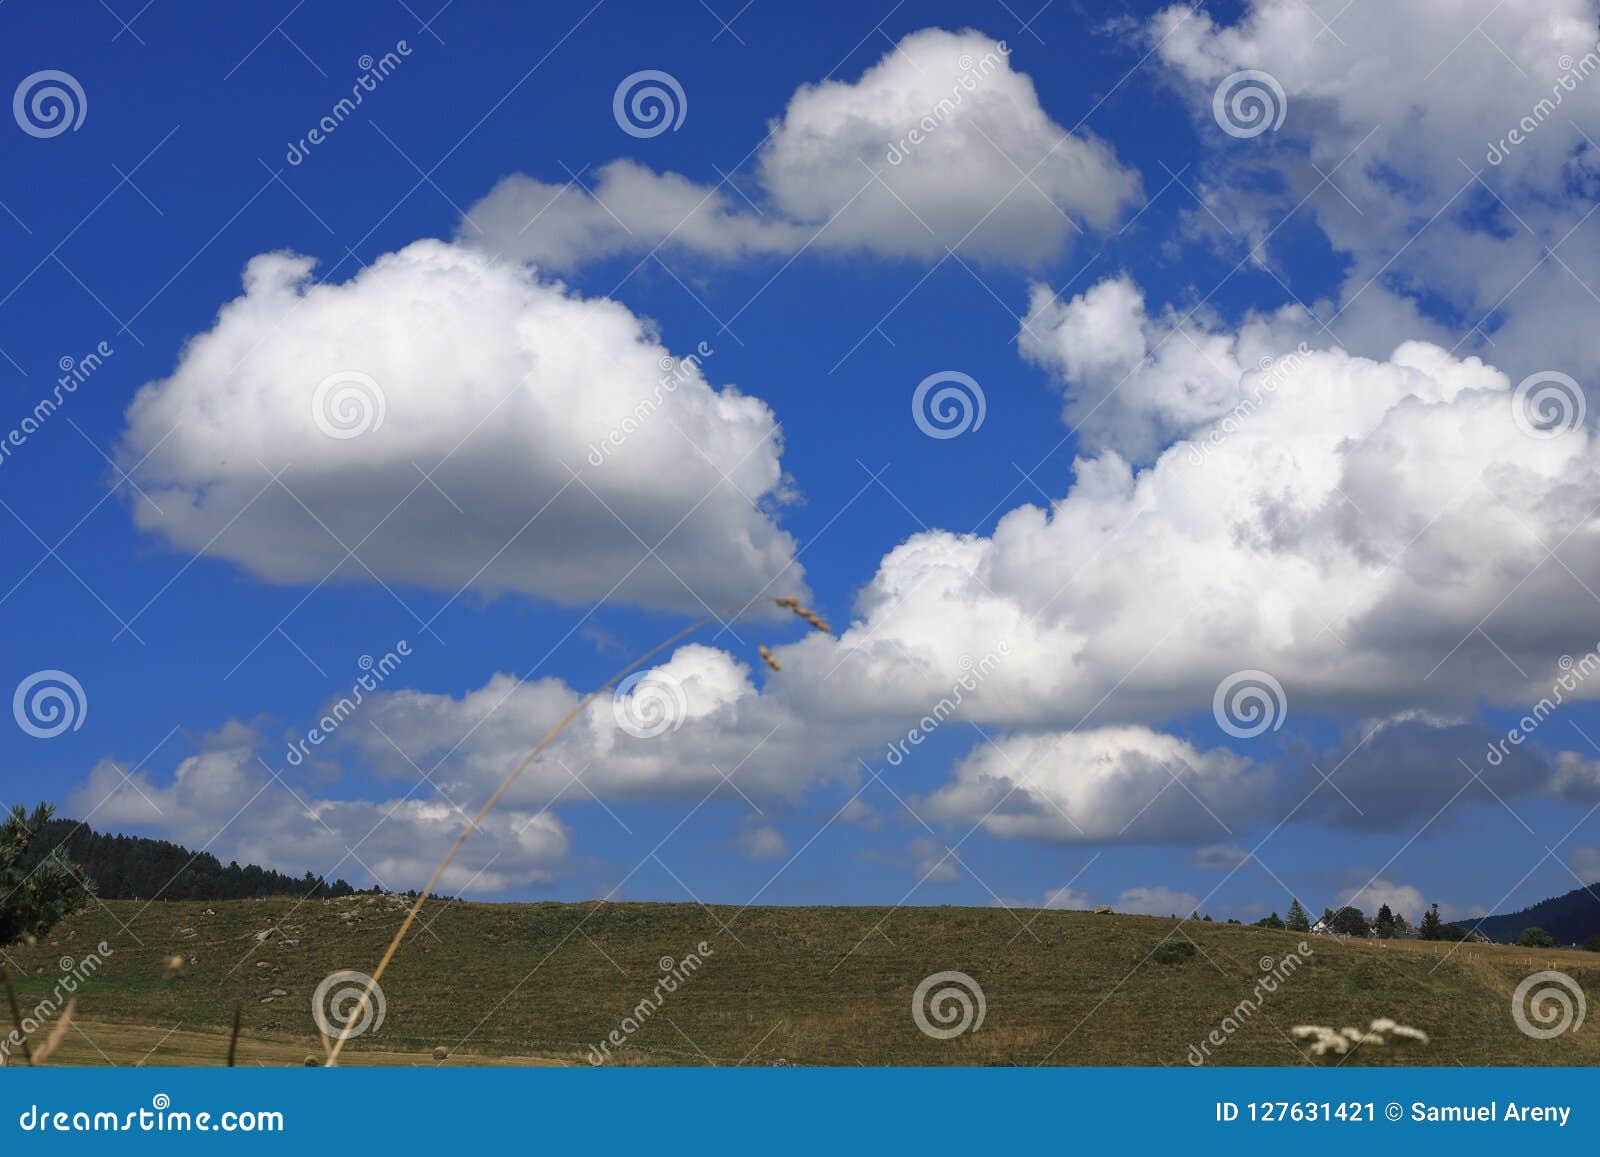 cumulo nimbus clouds and pyrenean landscape, france